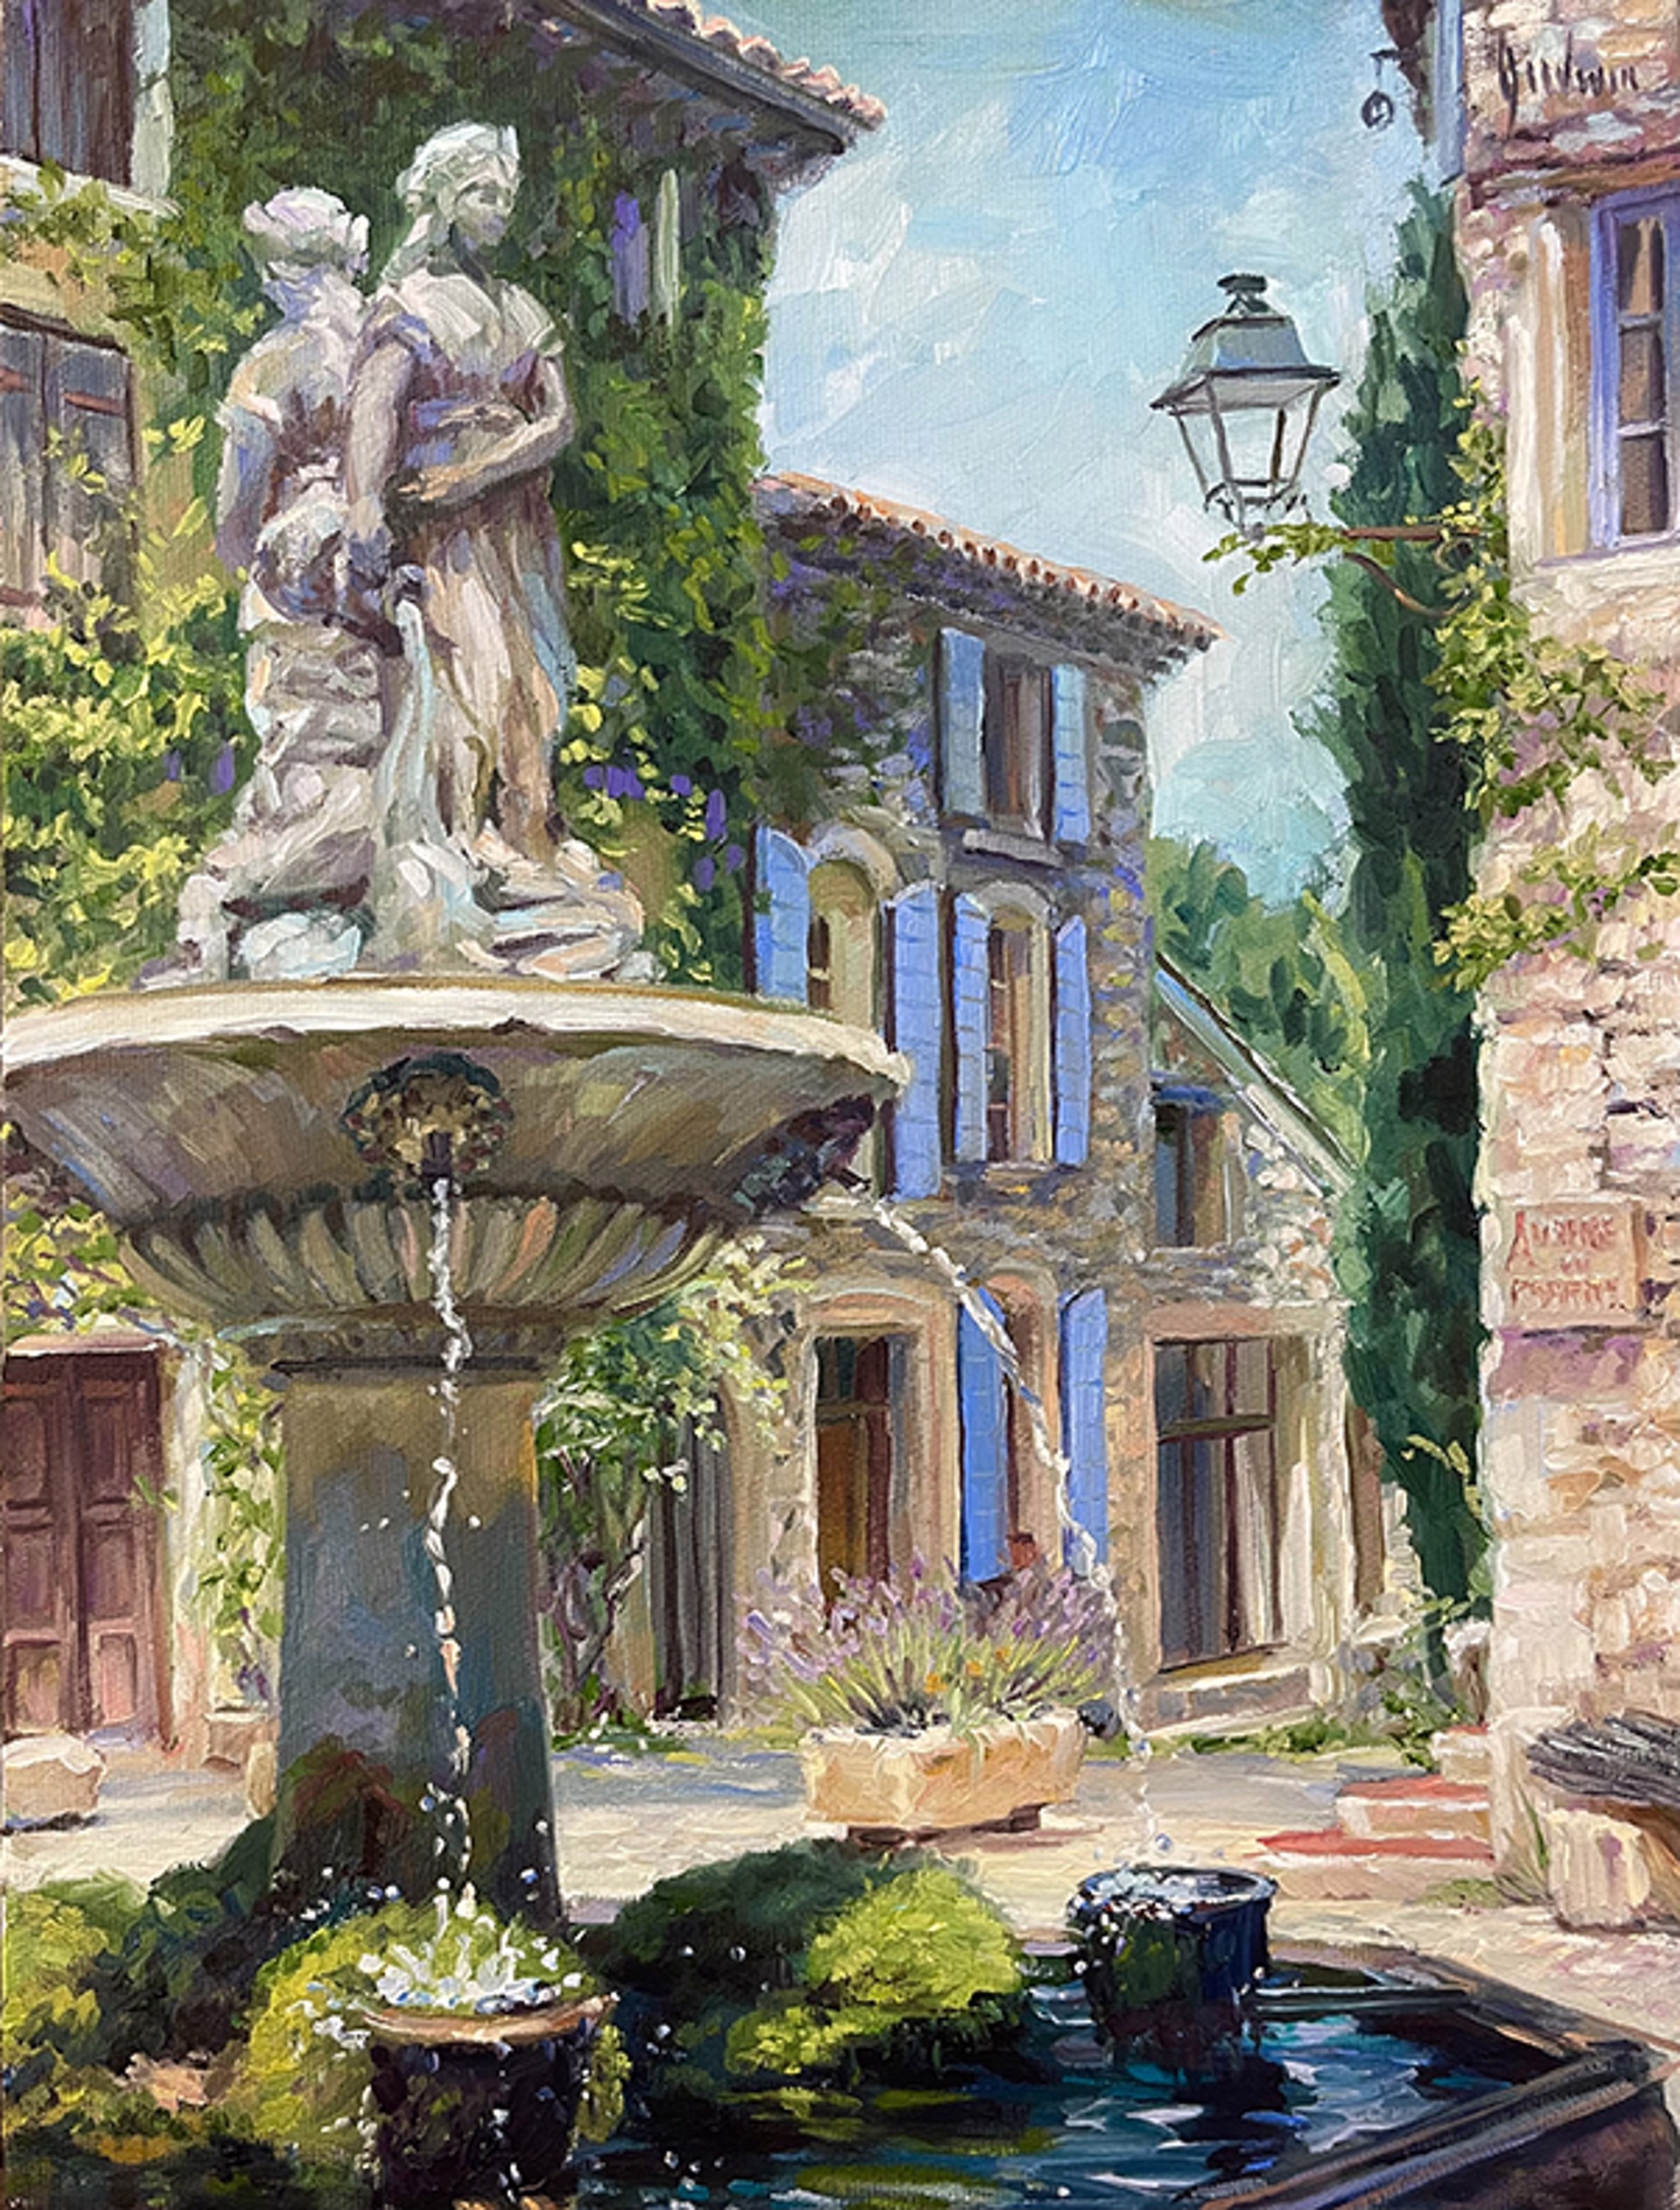 The Fountain of Saignon, France by Lindsay Goodwin